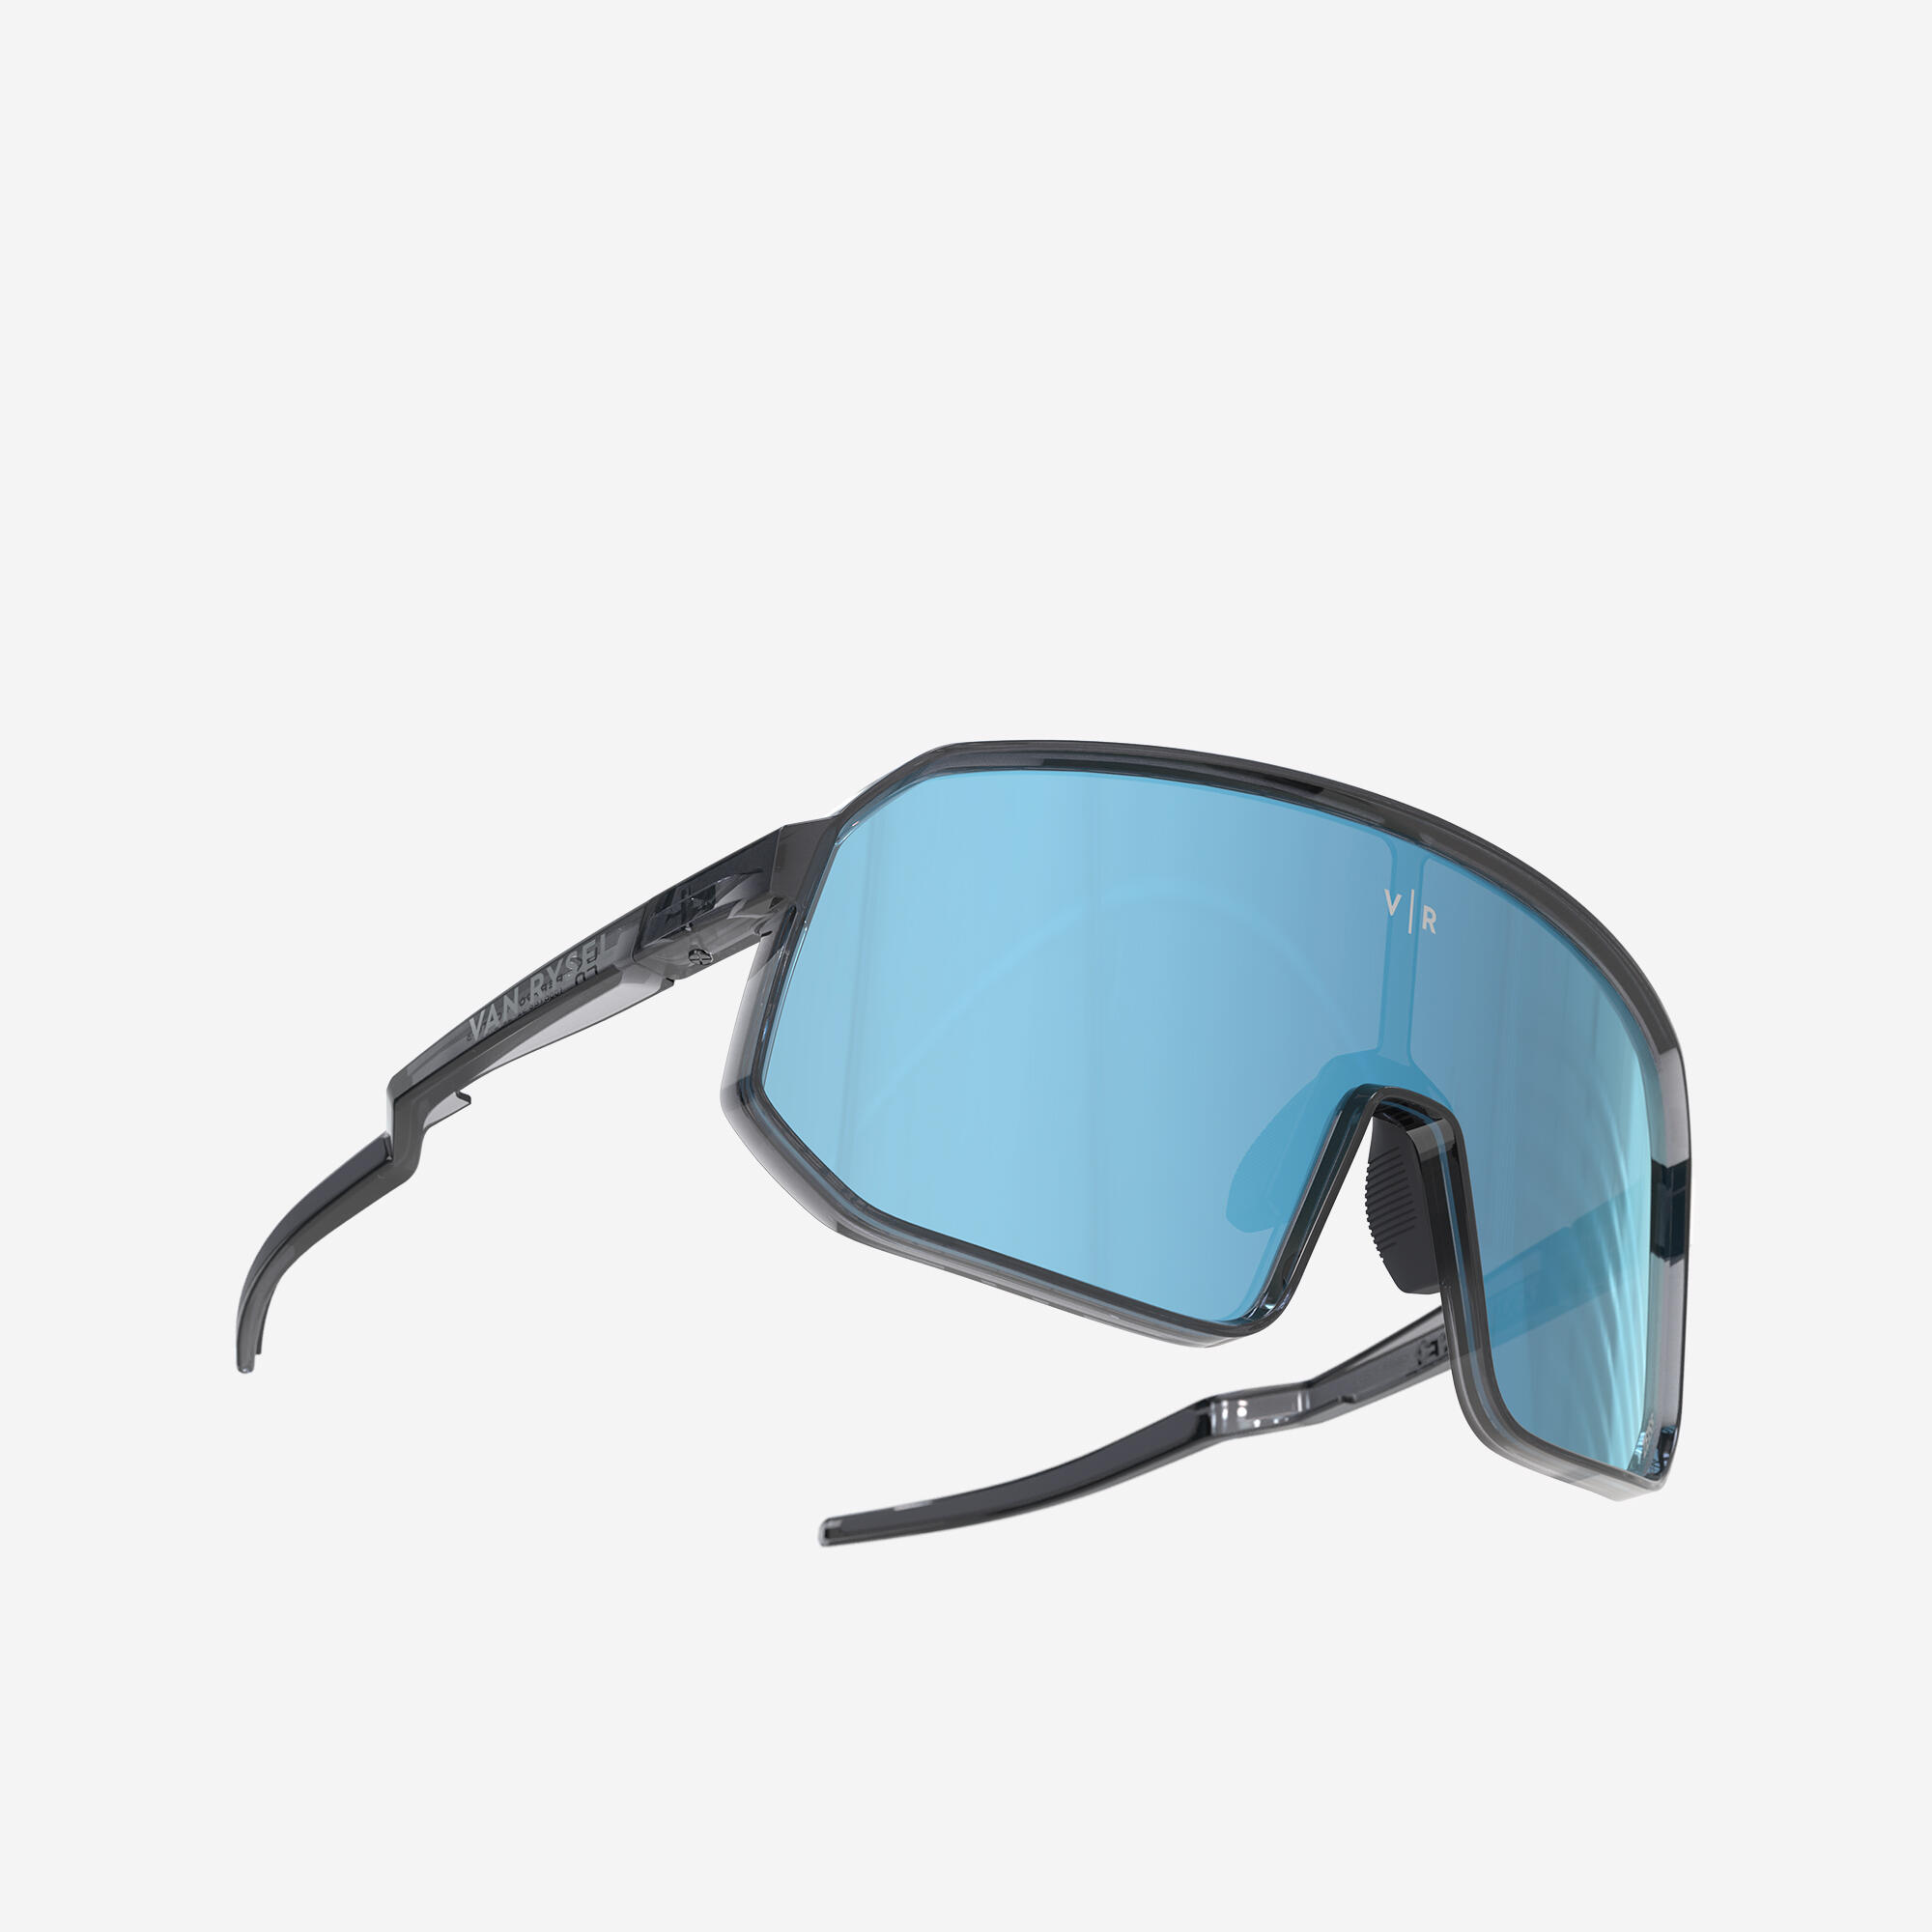 Sunglasses RoadR 900 Perf Light Pack - Grey / Translucent 5/6